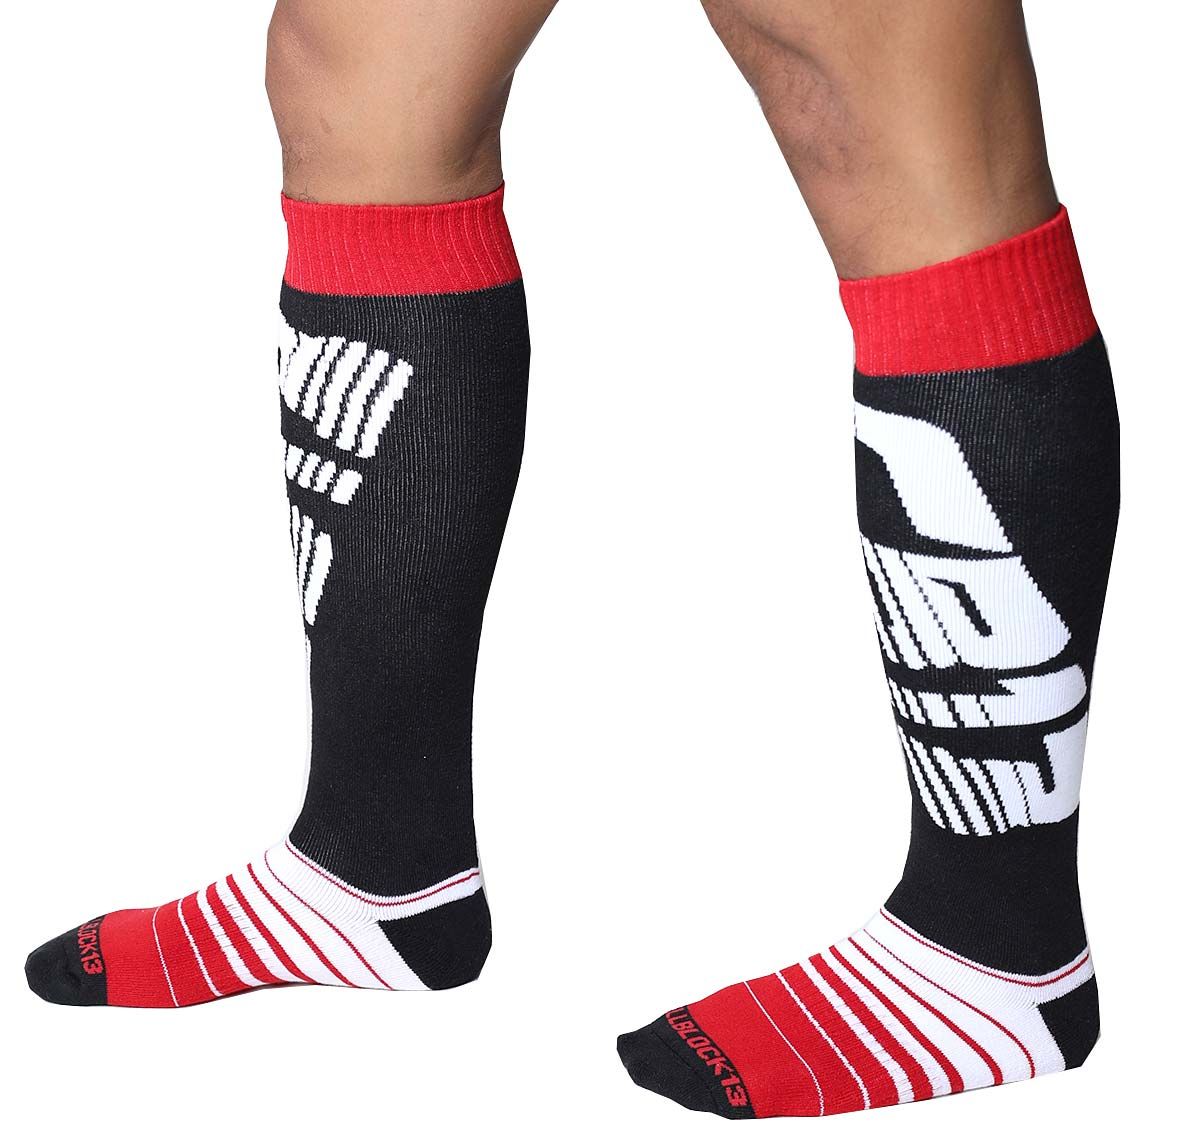 Cellblock 13 Sport socks VELOCITY 2.0 KNEE HIGH SOCK, red